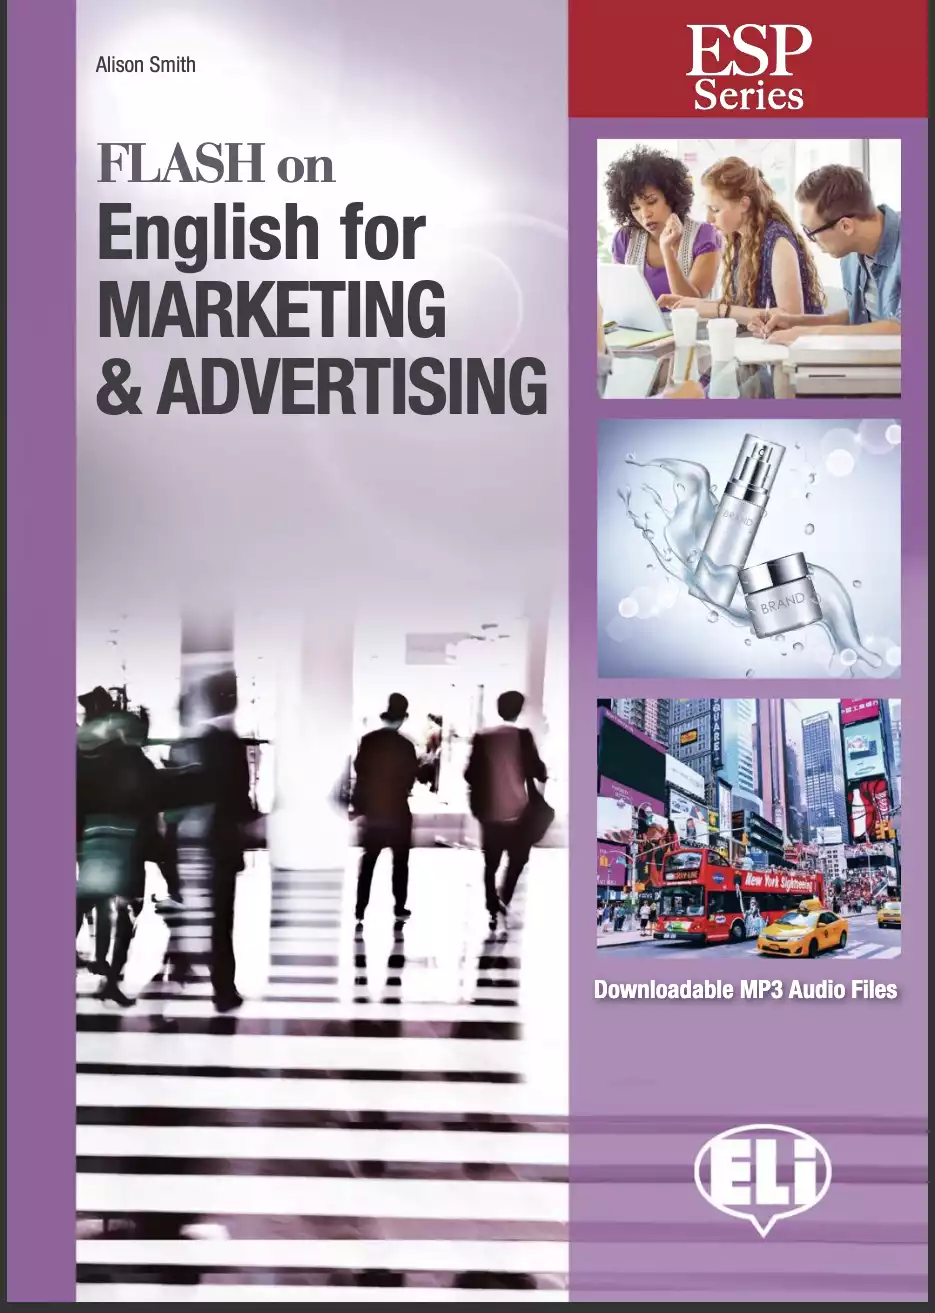 Flash on english for marketing & advertising